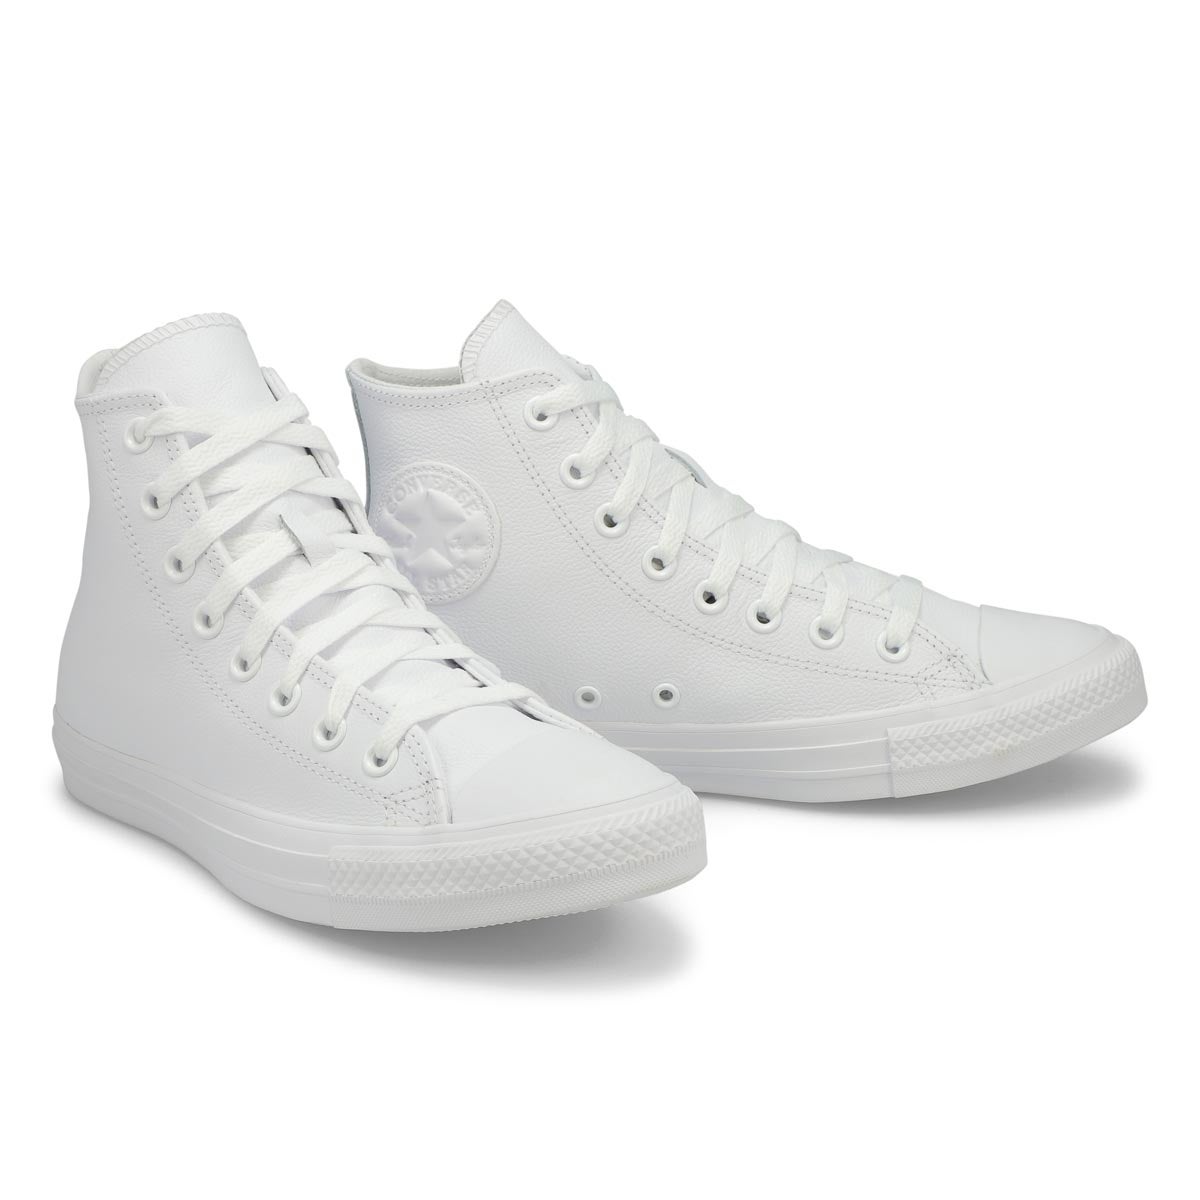 Women's All Star Leather Hi Top Sneaker - White